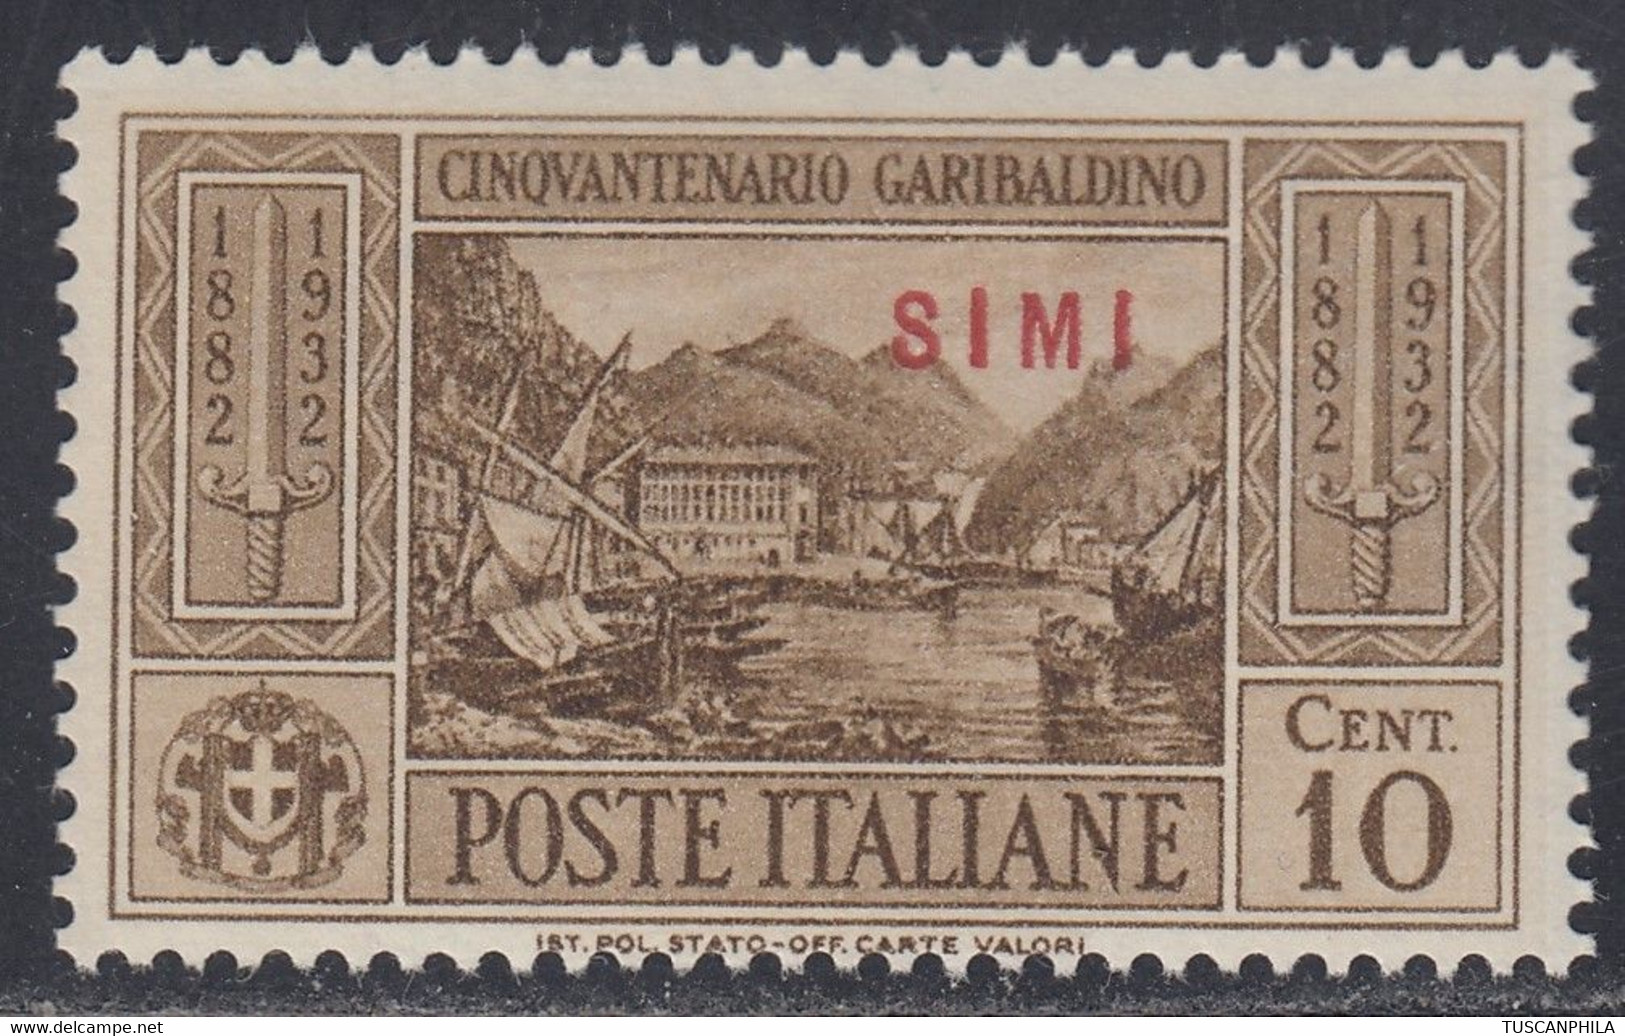 1932 Giuseppe Garibaldi 1 Val. Sass. 17 MNH** Cv 70 - Aegean (Simi)